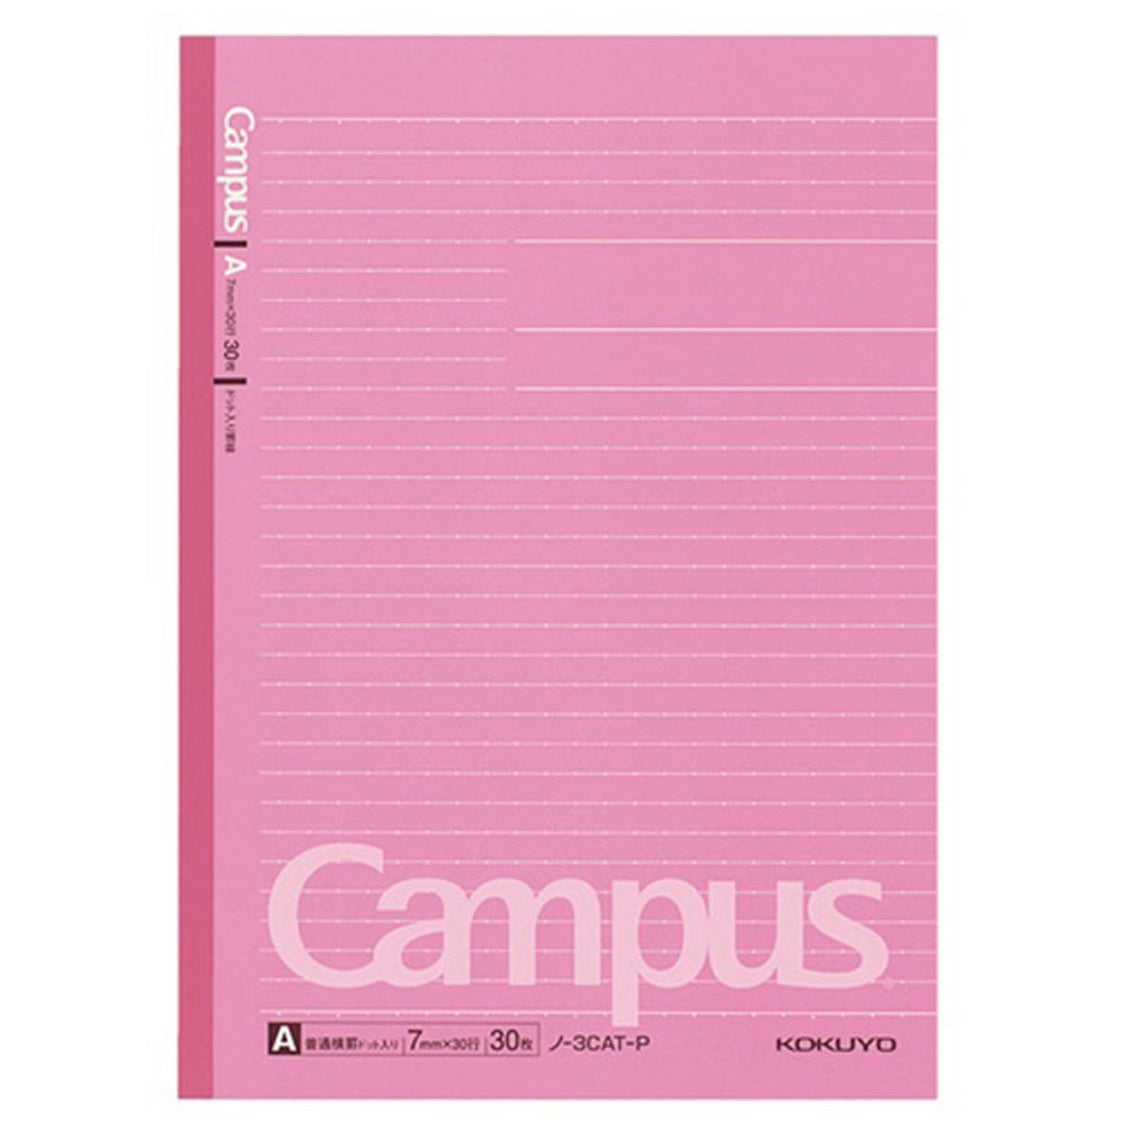 Kokuyo Campus Notebook - Semi B5 - Dotted 7 mm Rule - Pink